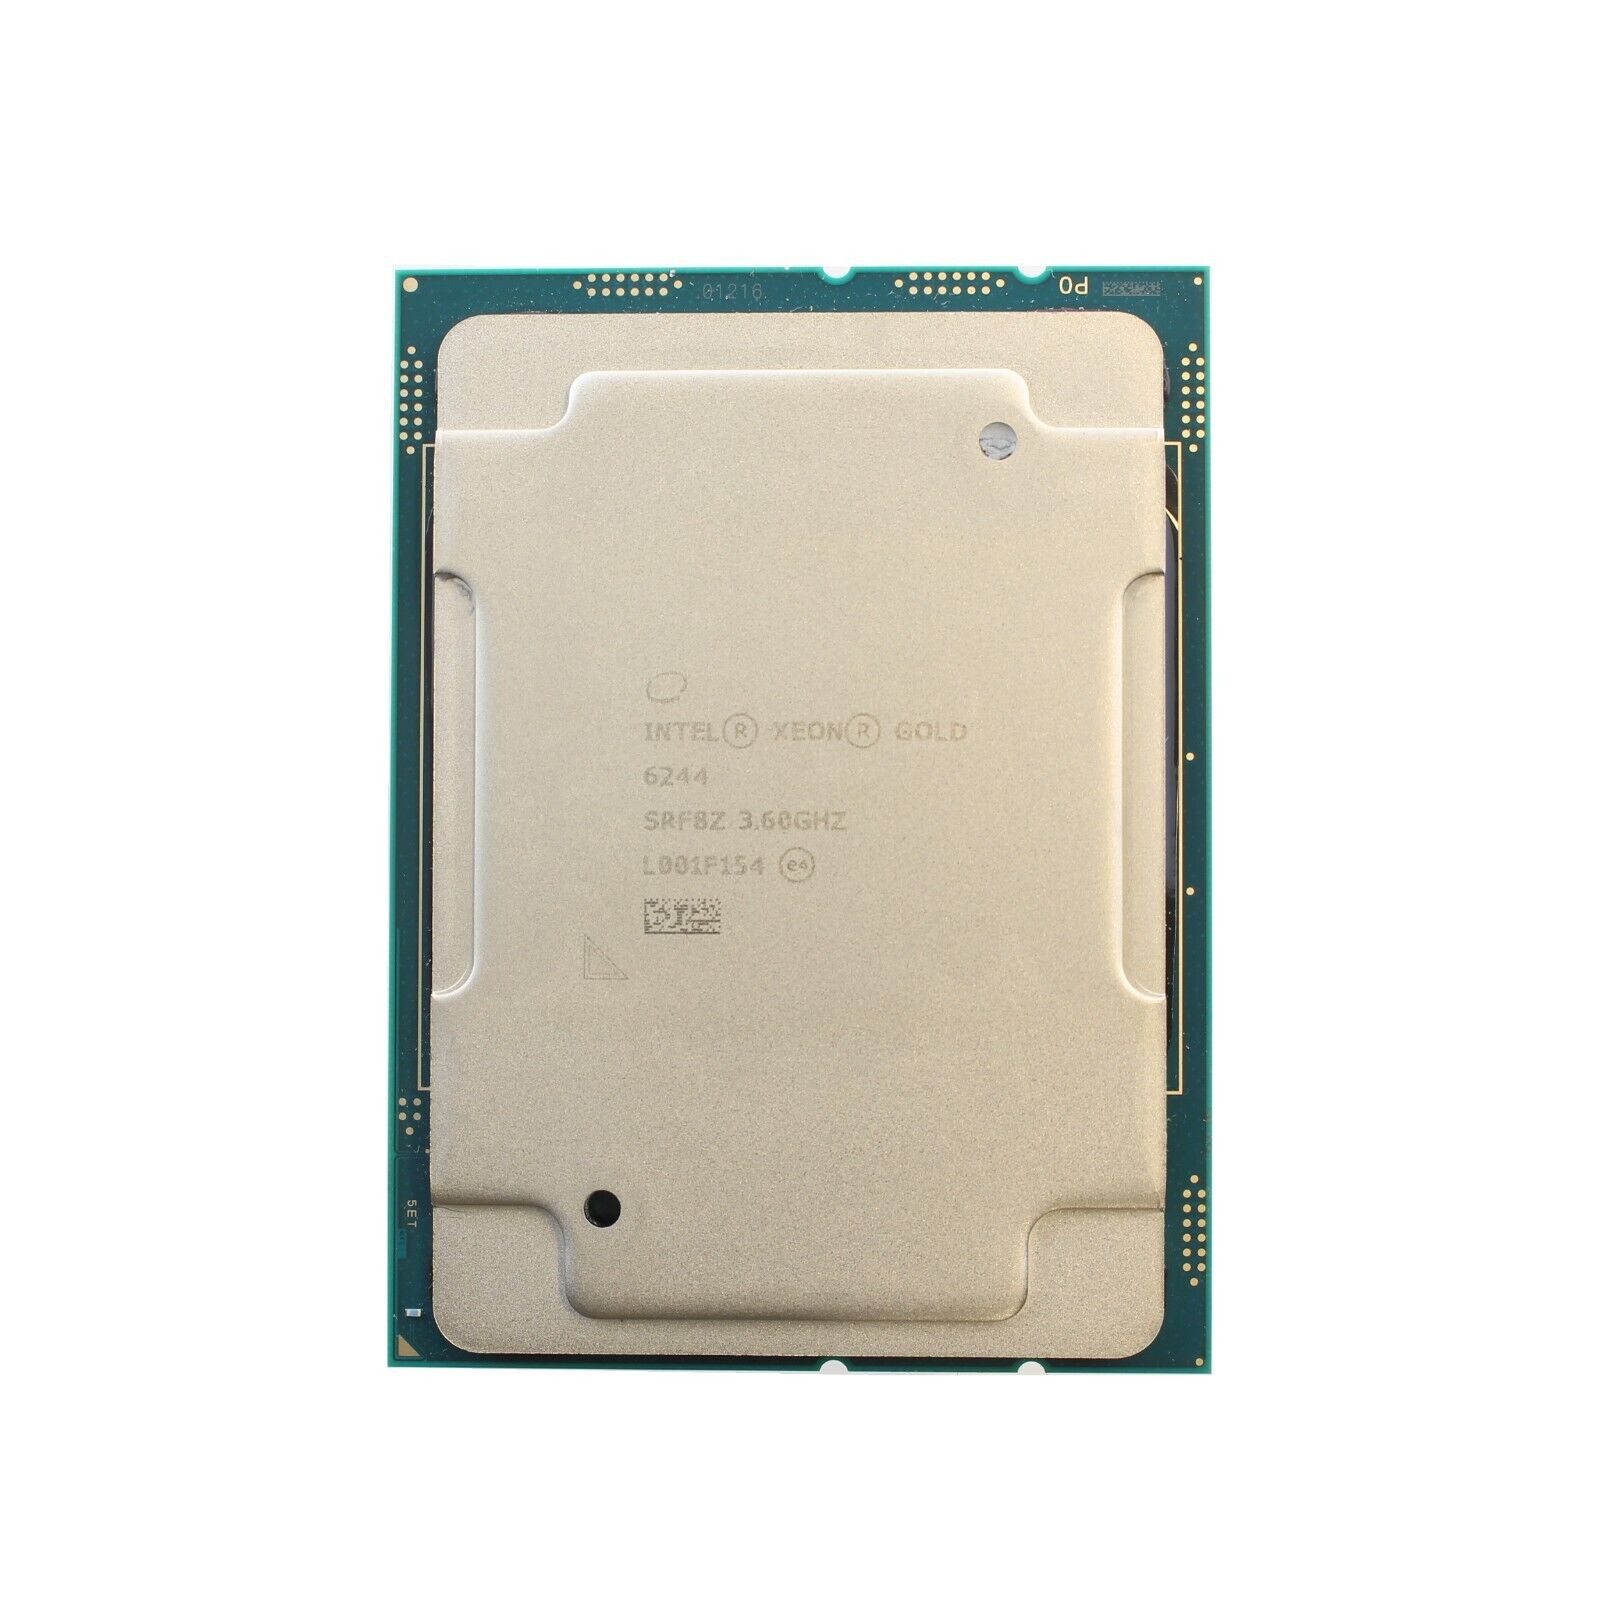 INTEL XEON GOLD 6244 CPU PROCESSOR 8 CORE 3.60GHz 24.75MB L3 CACHE 150W SRF8Z